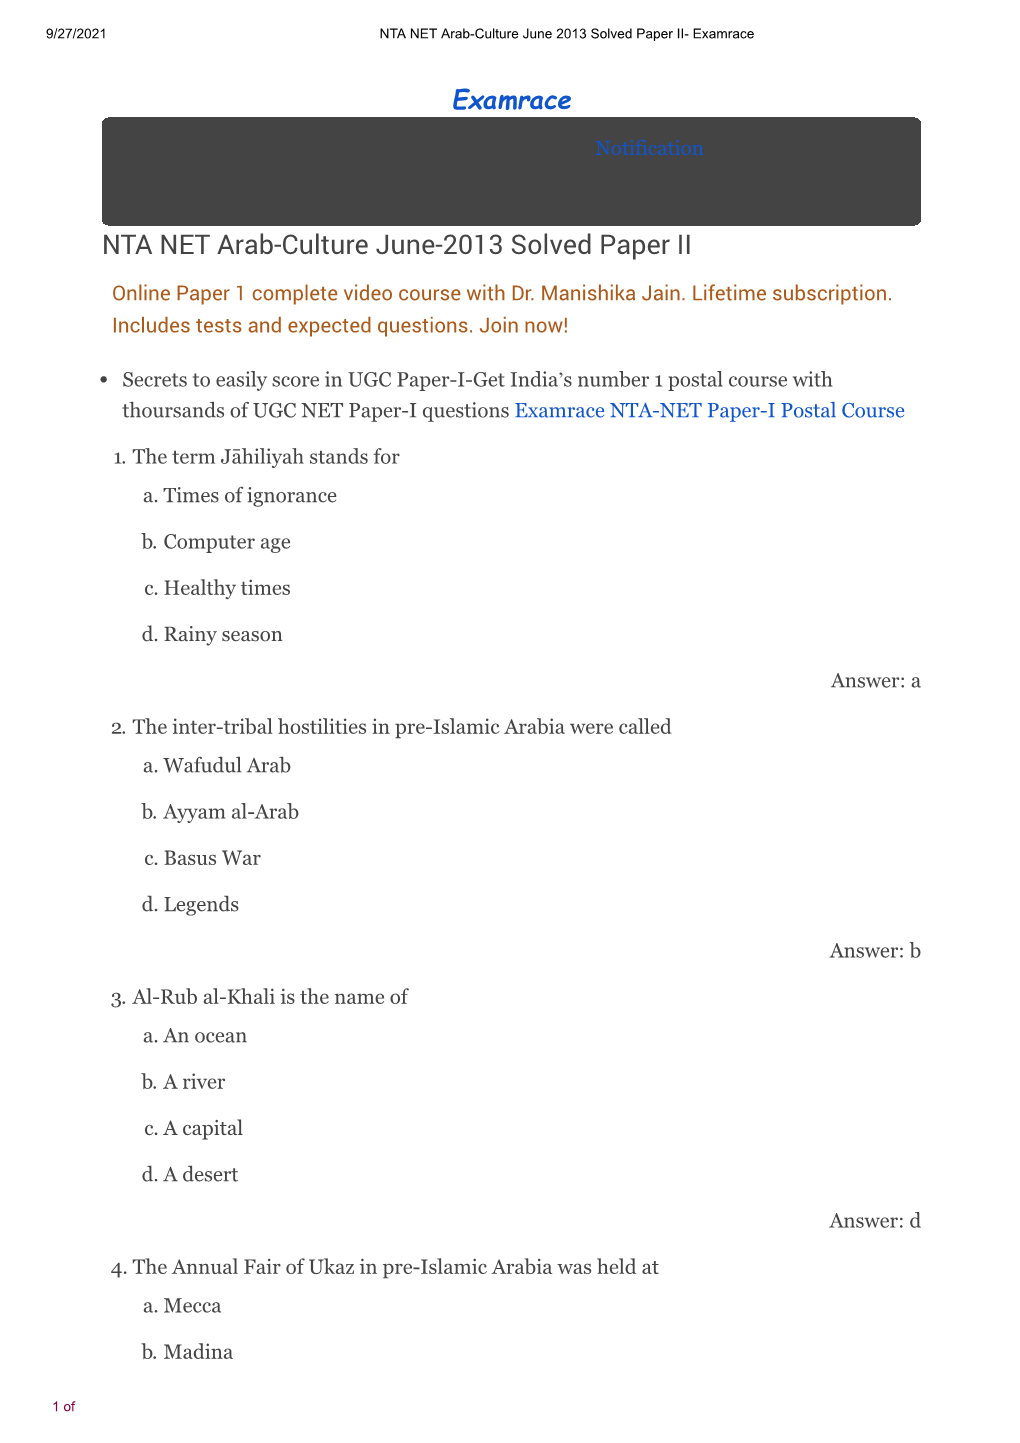 NTA NET Arab-Culture June-2013 Solved Paper II